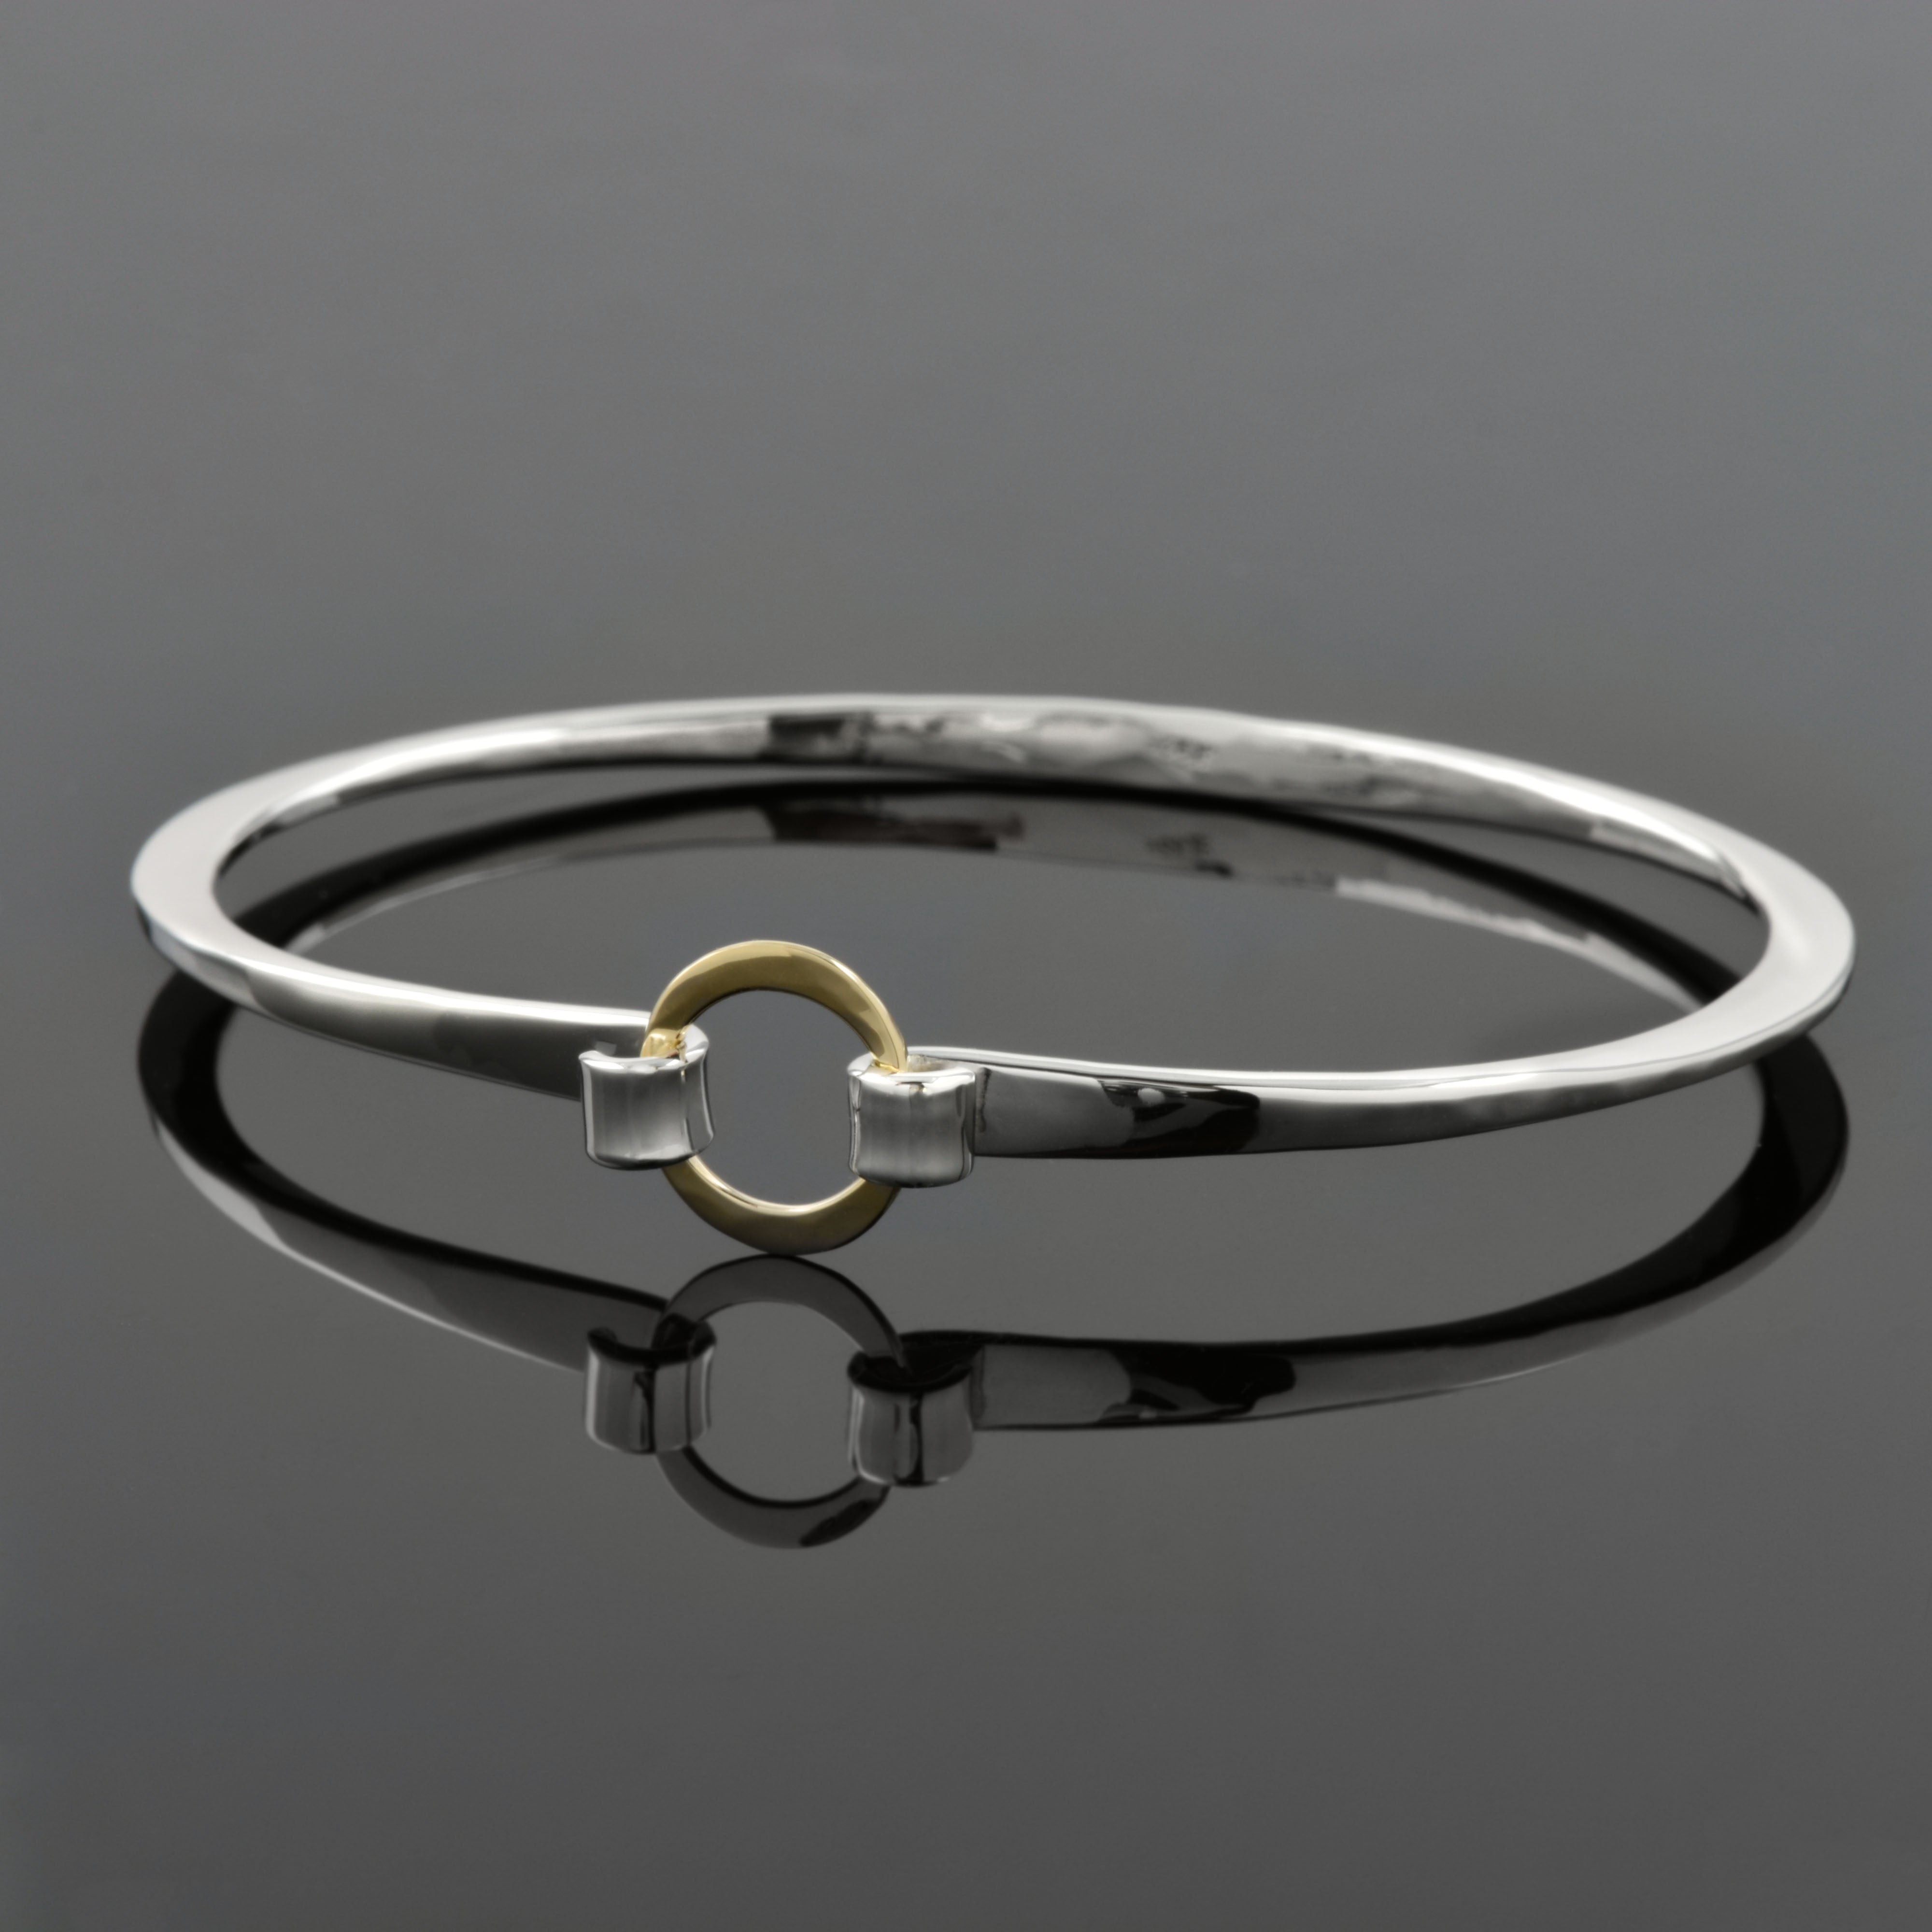 Handmade Silver and Gold "Ring" Bracelet